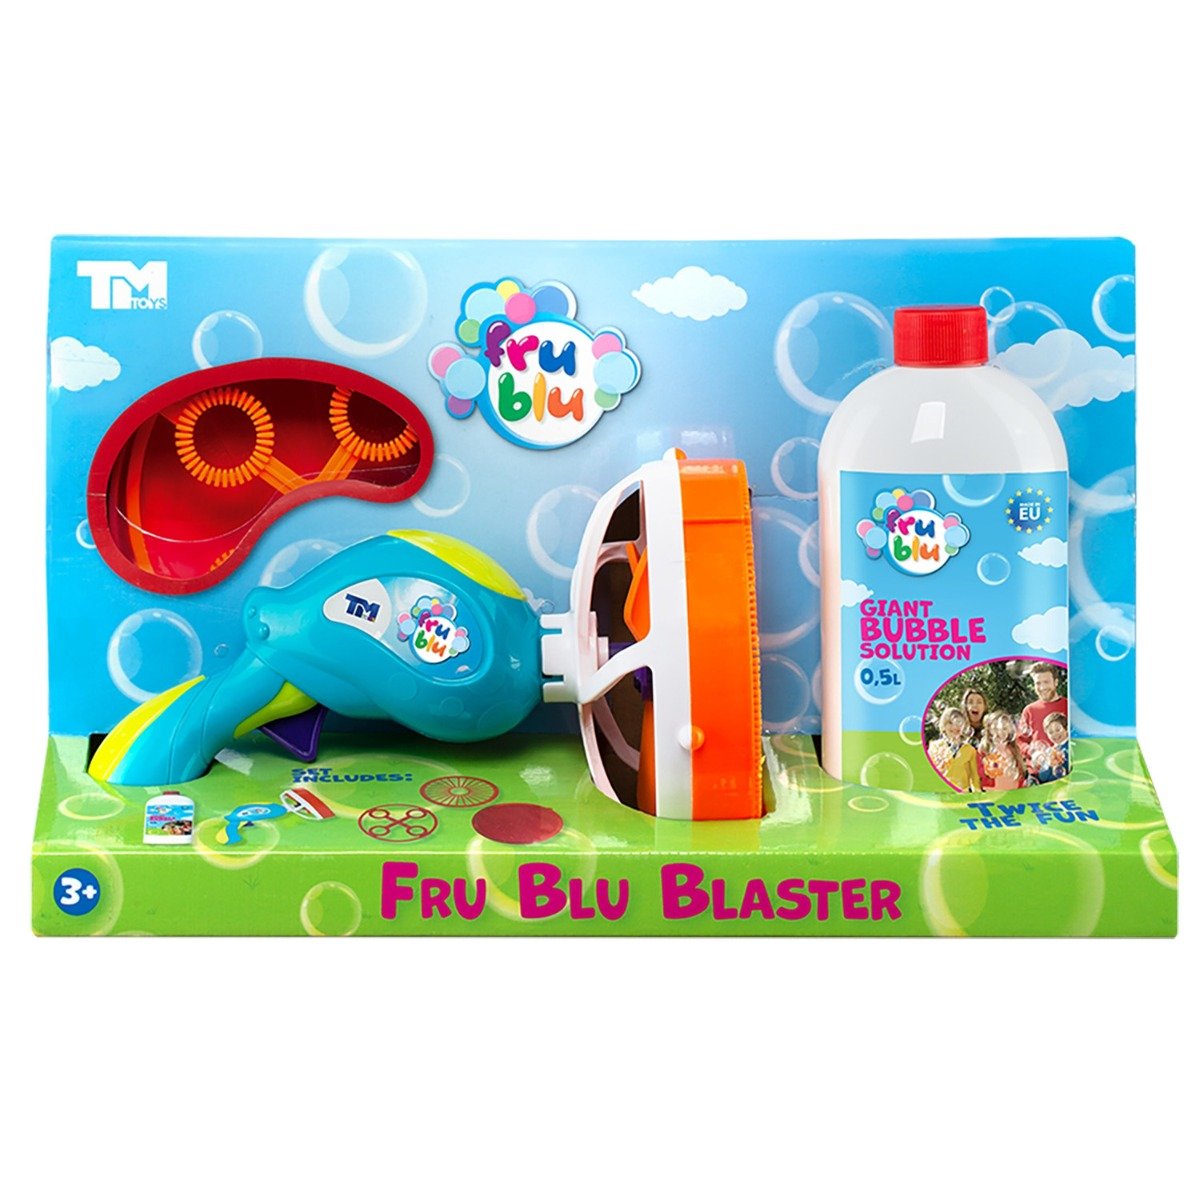 Set lansator baloane de sapun si solutie, Fru Blu, Blaster 2 in 1